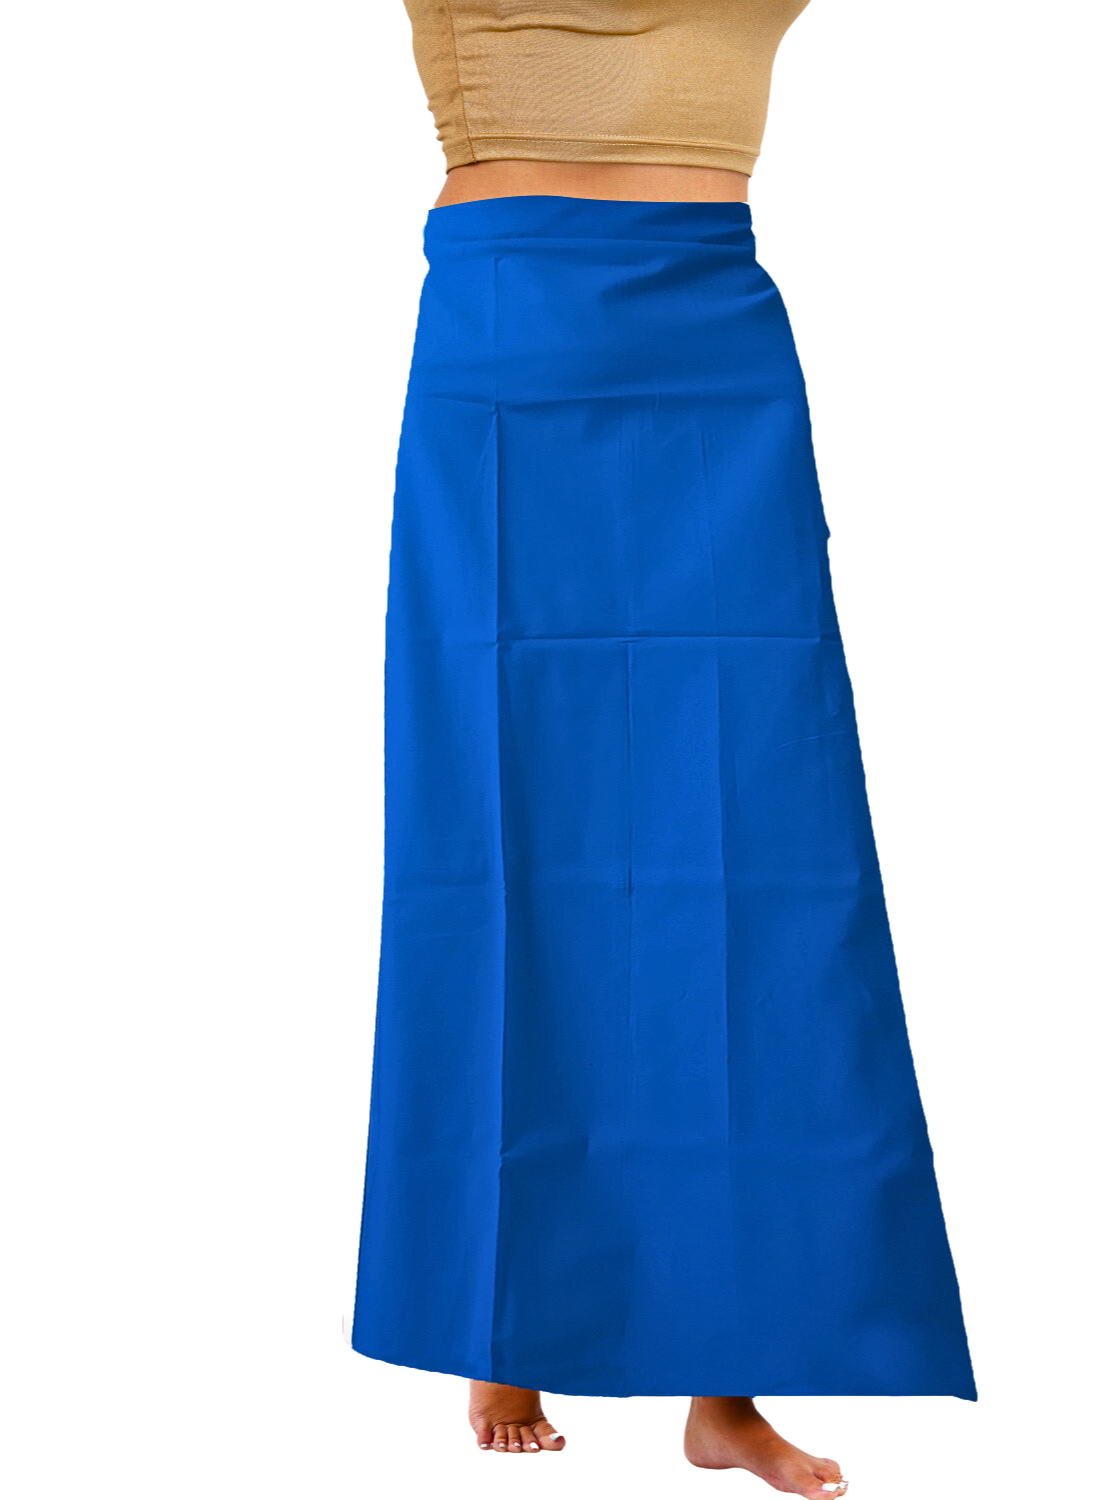 MANGAI Premium Elegant Cotton Petticoats - 7 Part | Premium Branded Women's Cotton Embroidery Petticoats